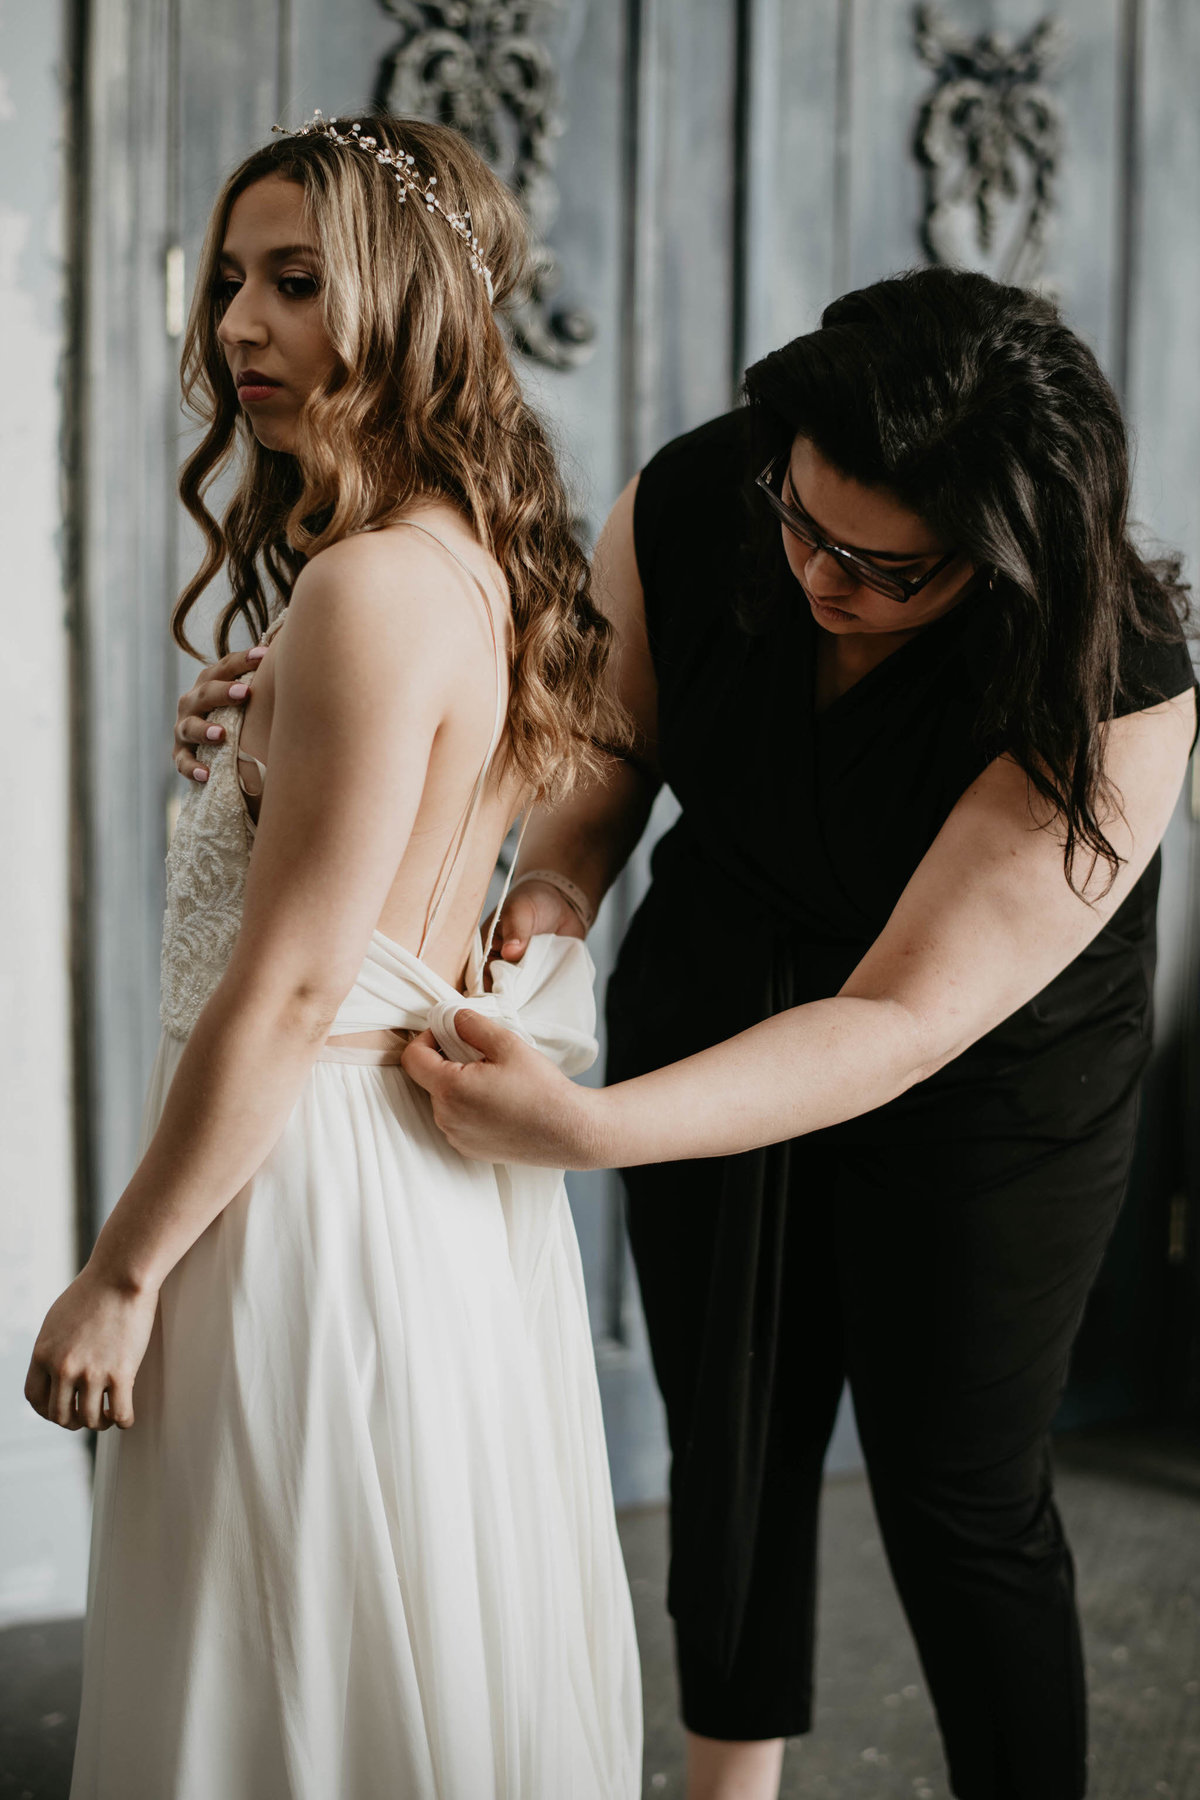 wedding planner tying wedding dress for her bride